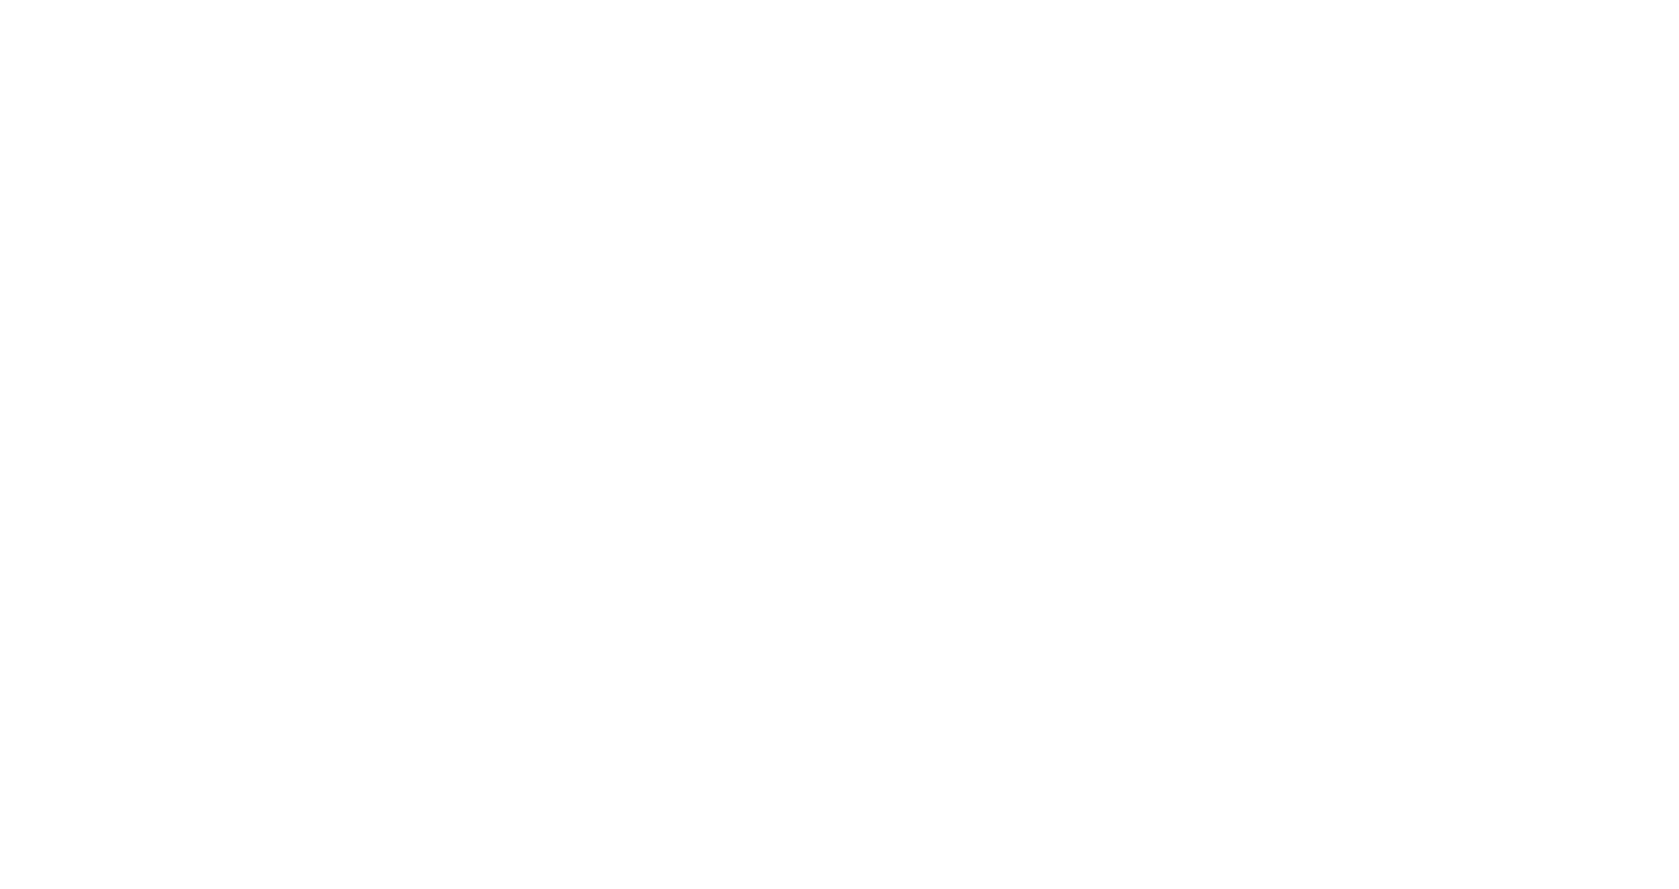 https://sota.co.uk/wp-content/uploads/southdowns-logo-white.png